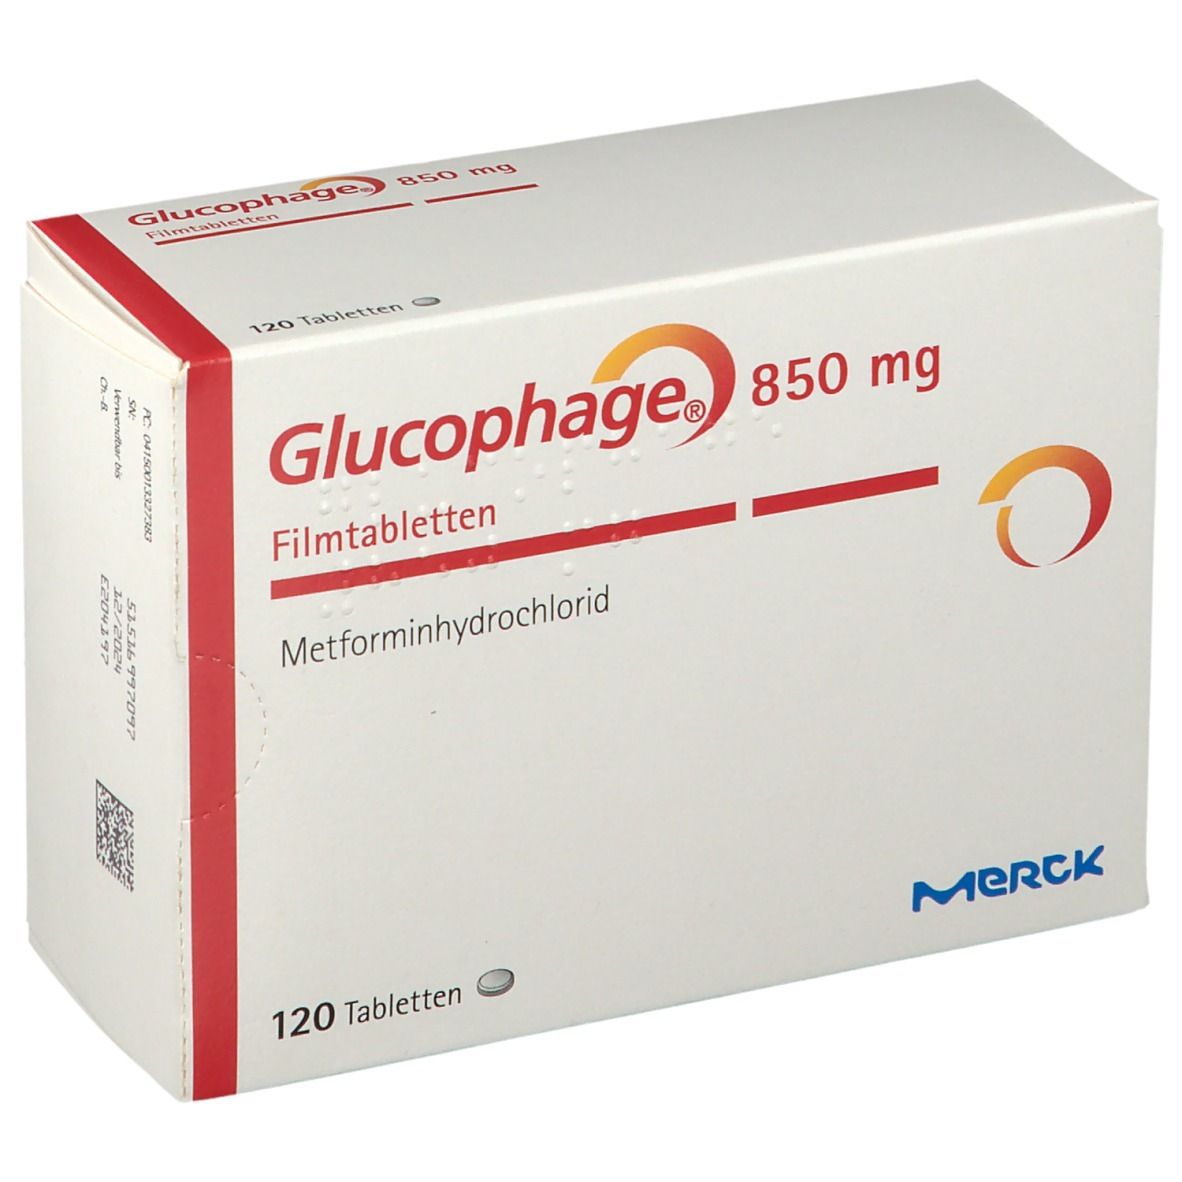 Glucophage® 850 mg